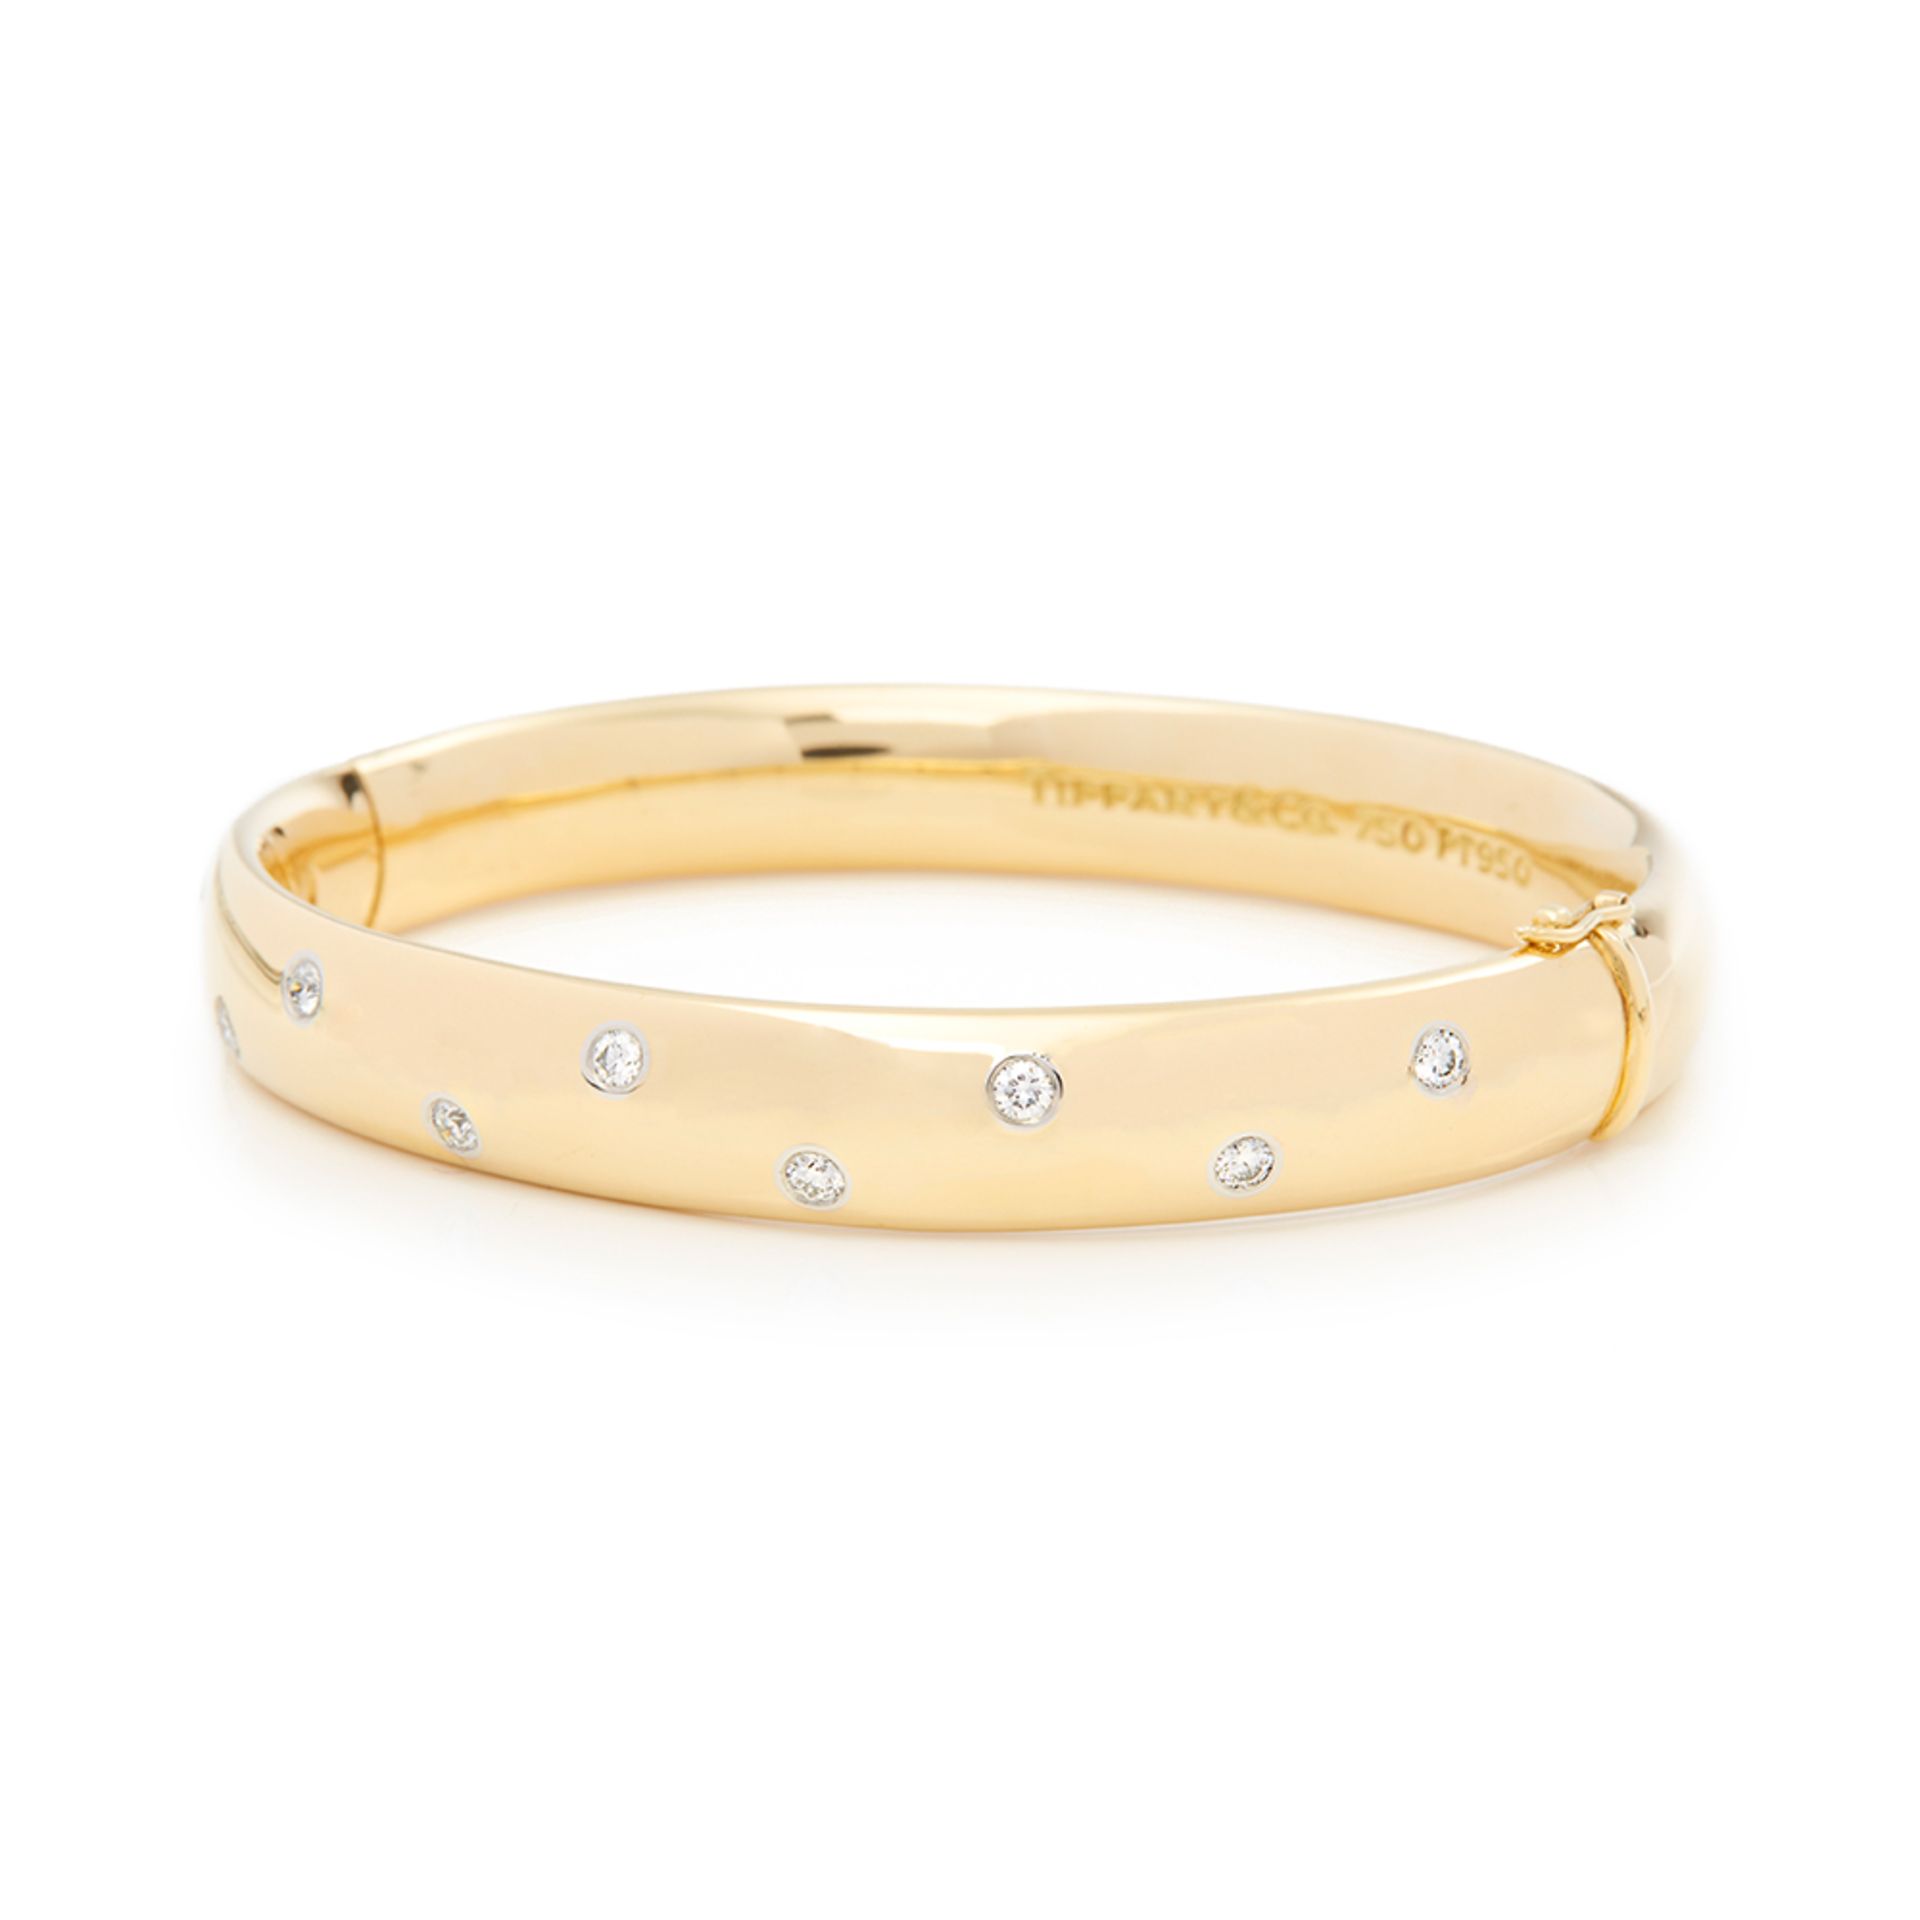 Tiffany & Co. 18k Yellow Gold Diamond Etoile Bracelet ***Reserve lowered***